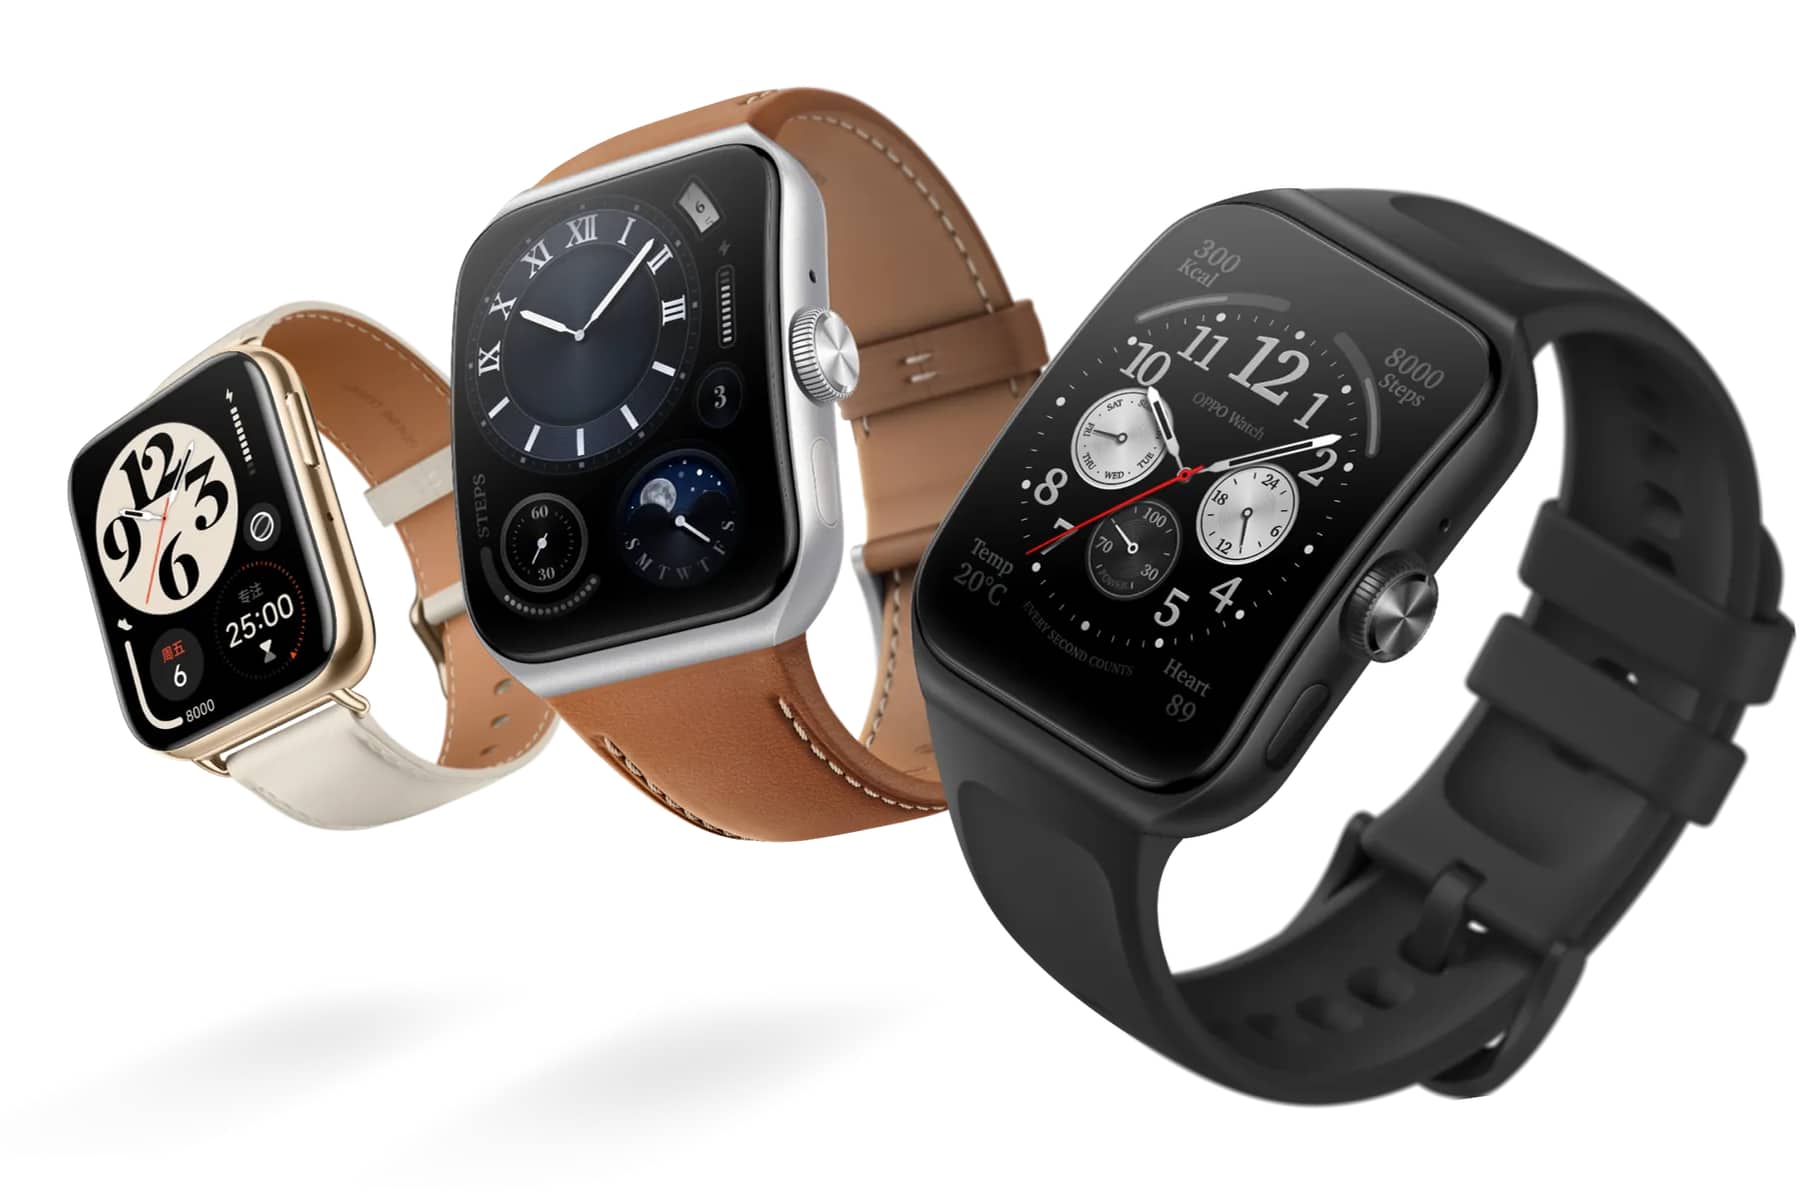 Oppo's new Apple Watch clone has an important spec inside